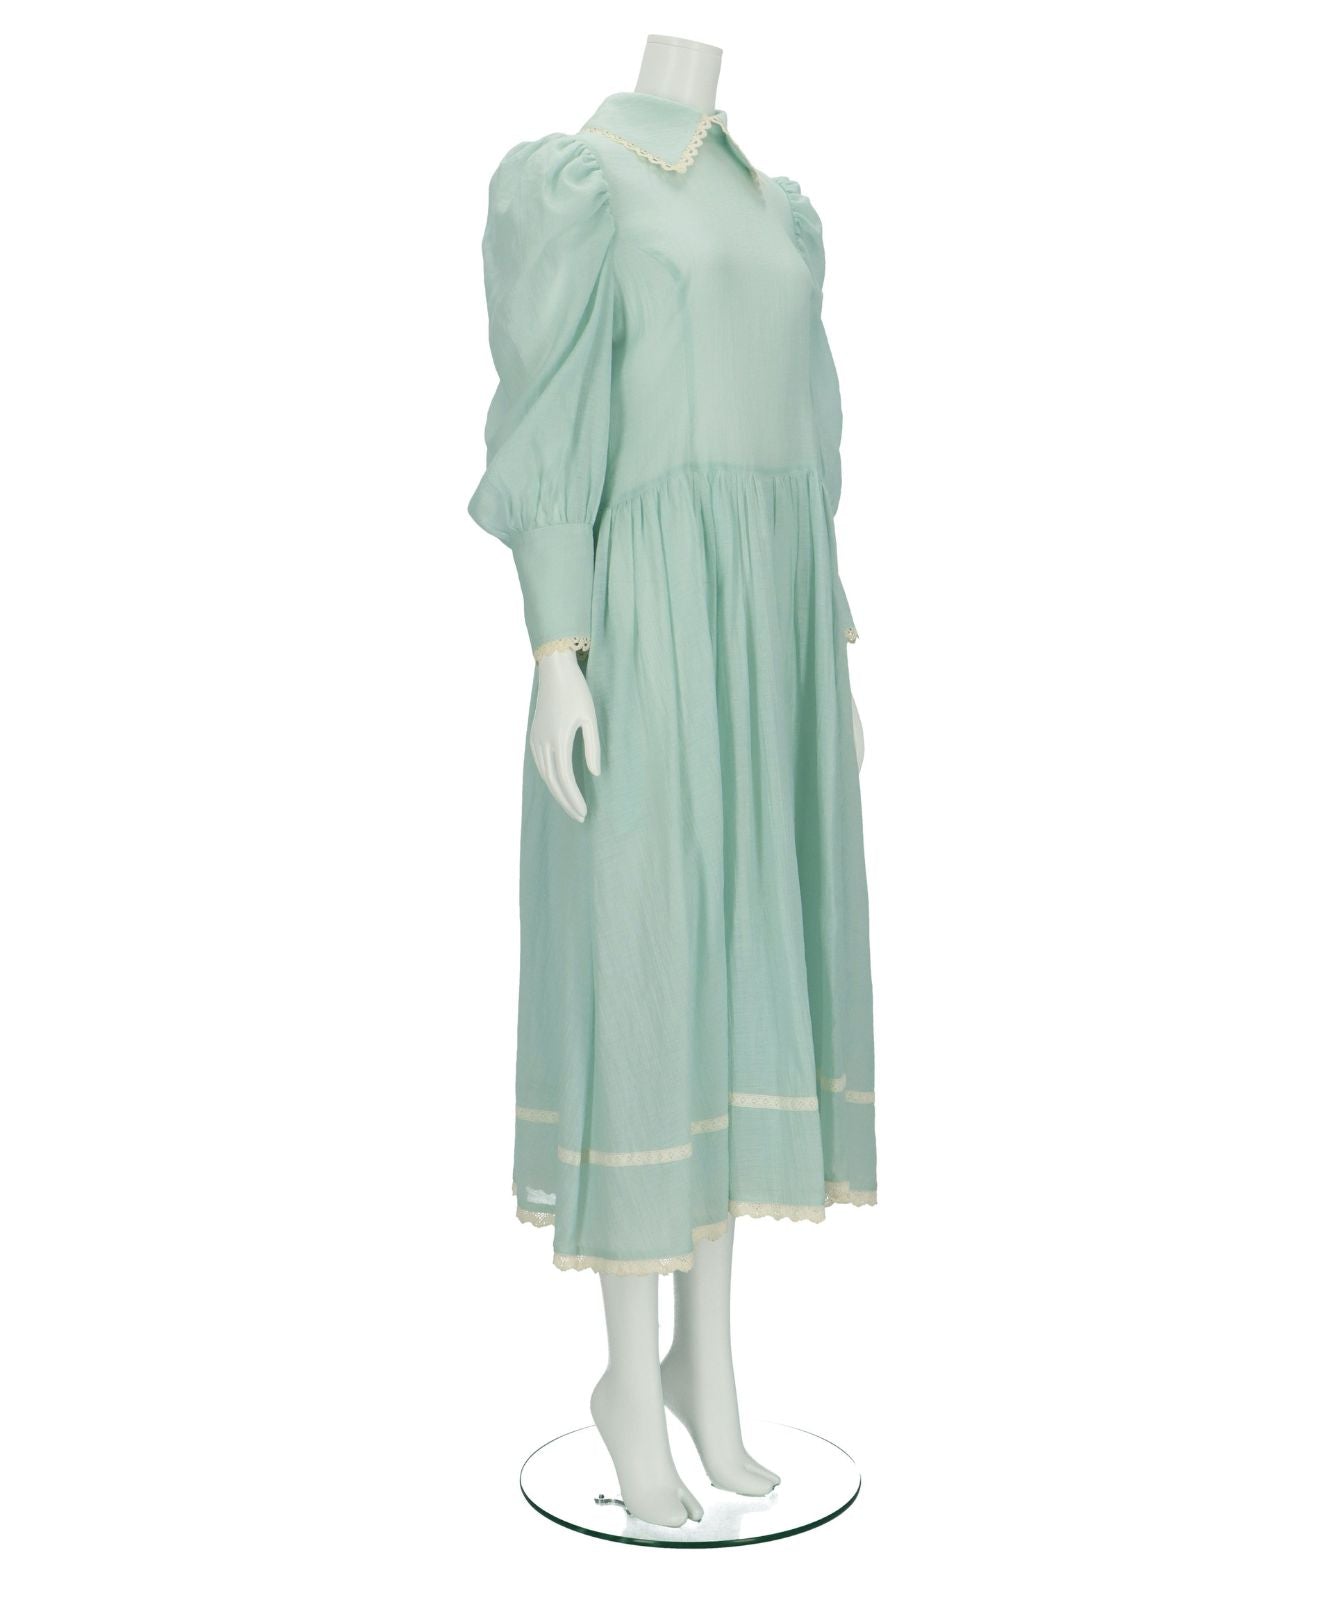 ≪在庫販売≫【CANDY DRESS CRAZY GARDEN】lace scallop sheer dress ...